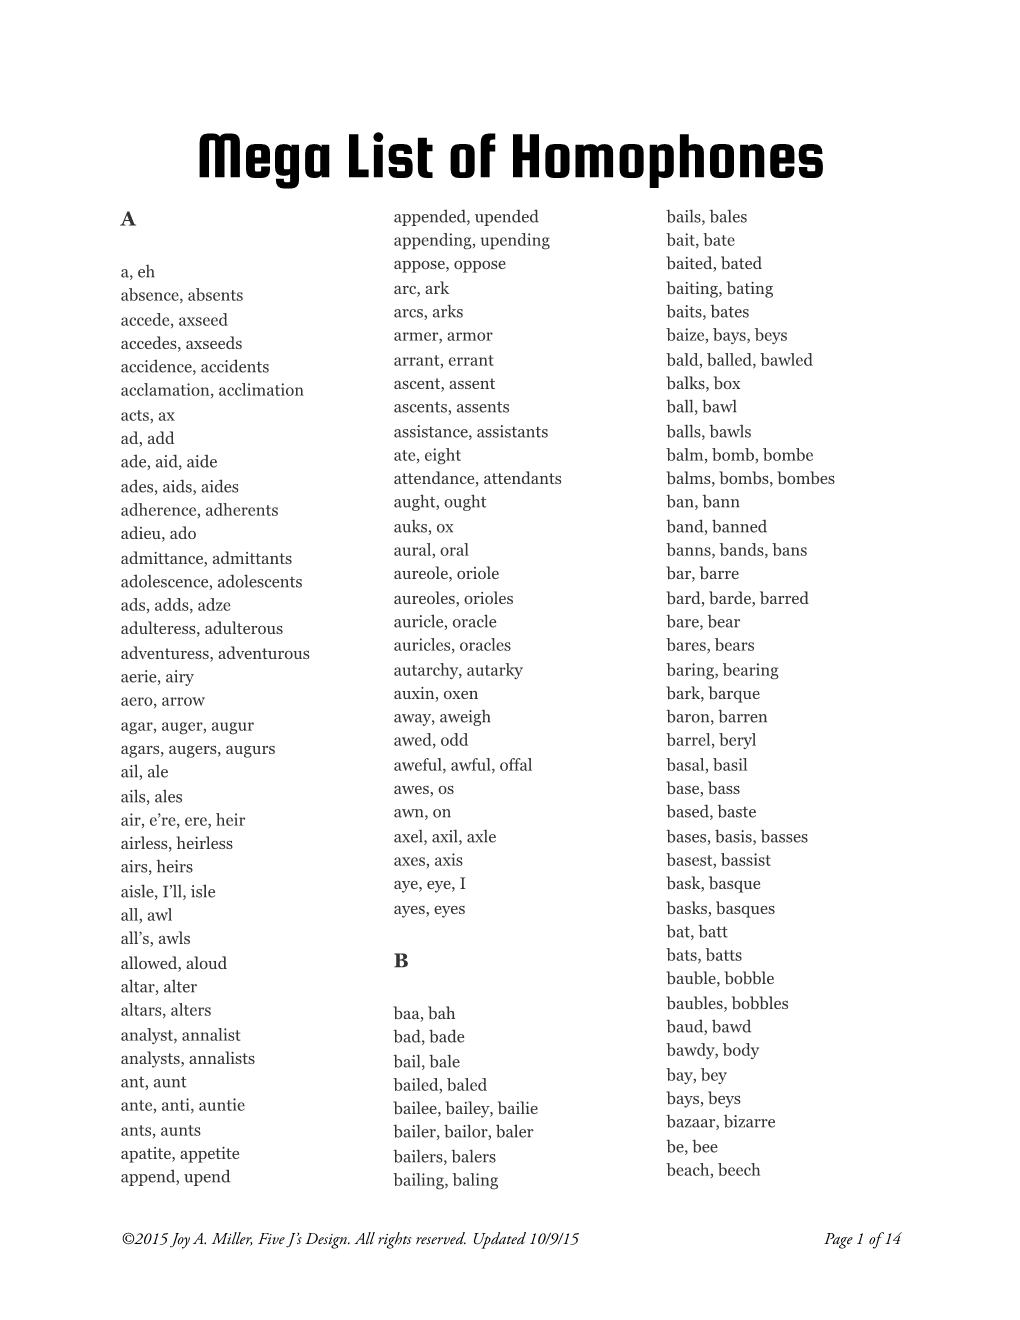 Homophone List